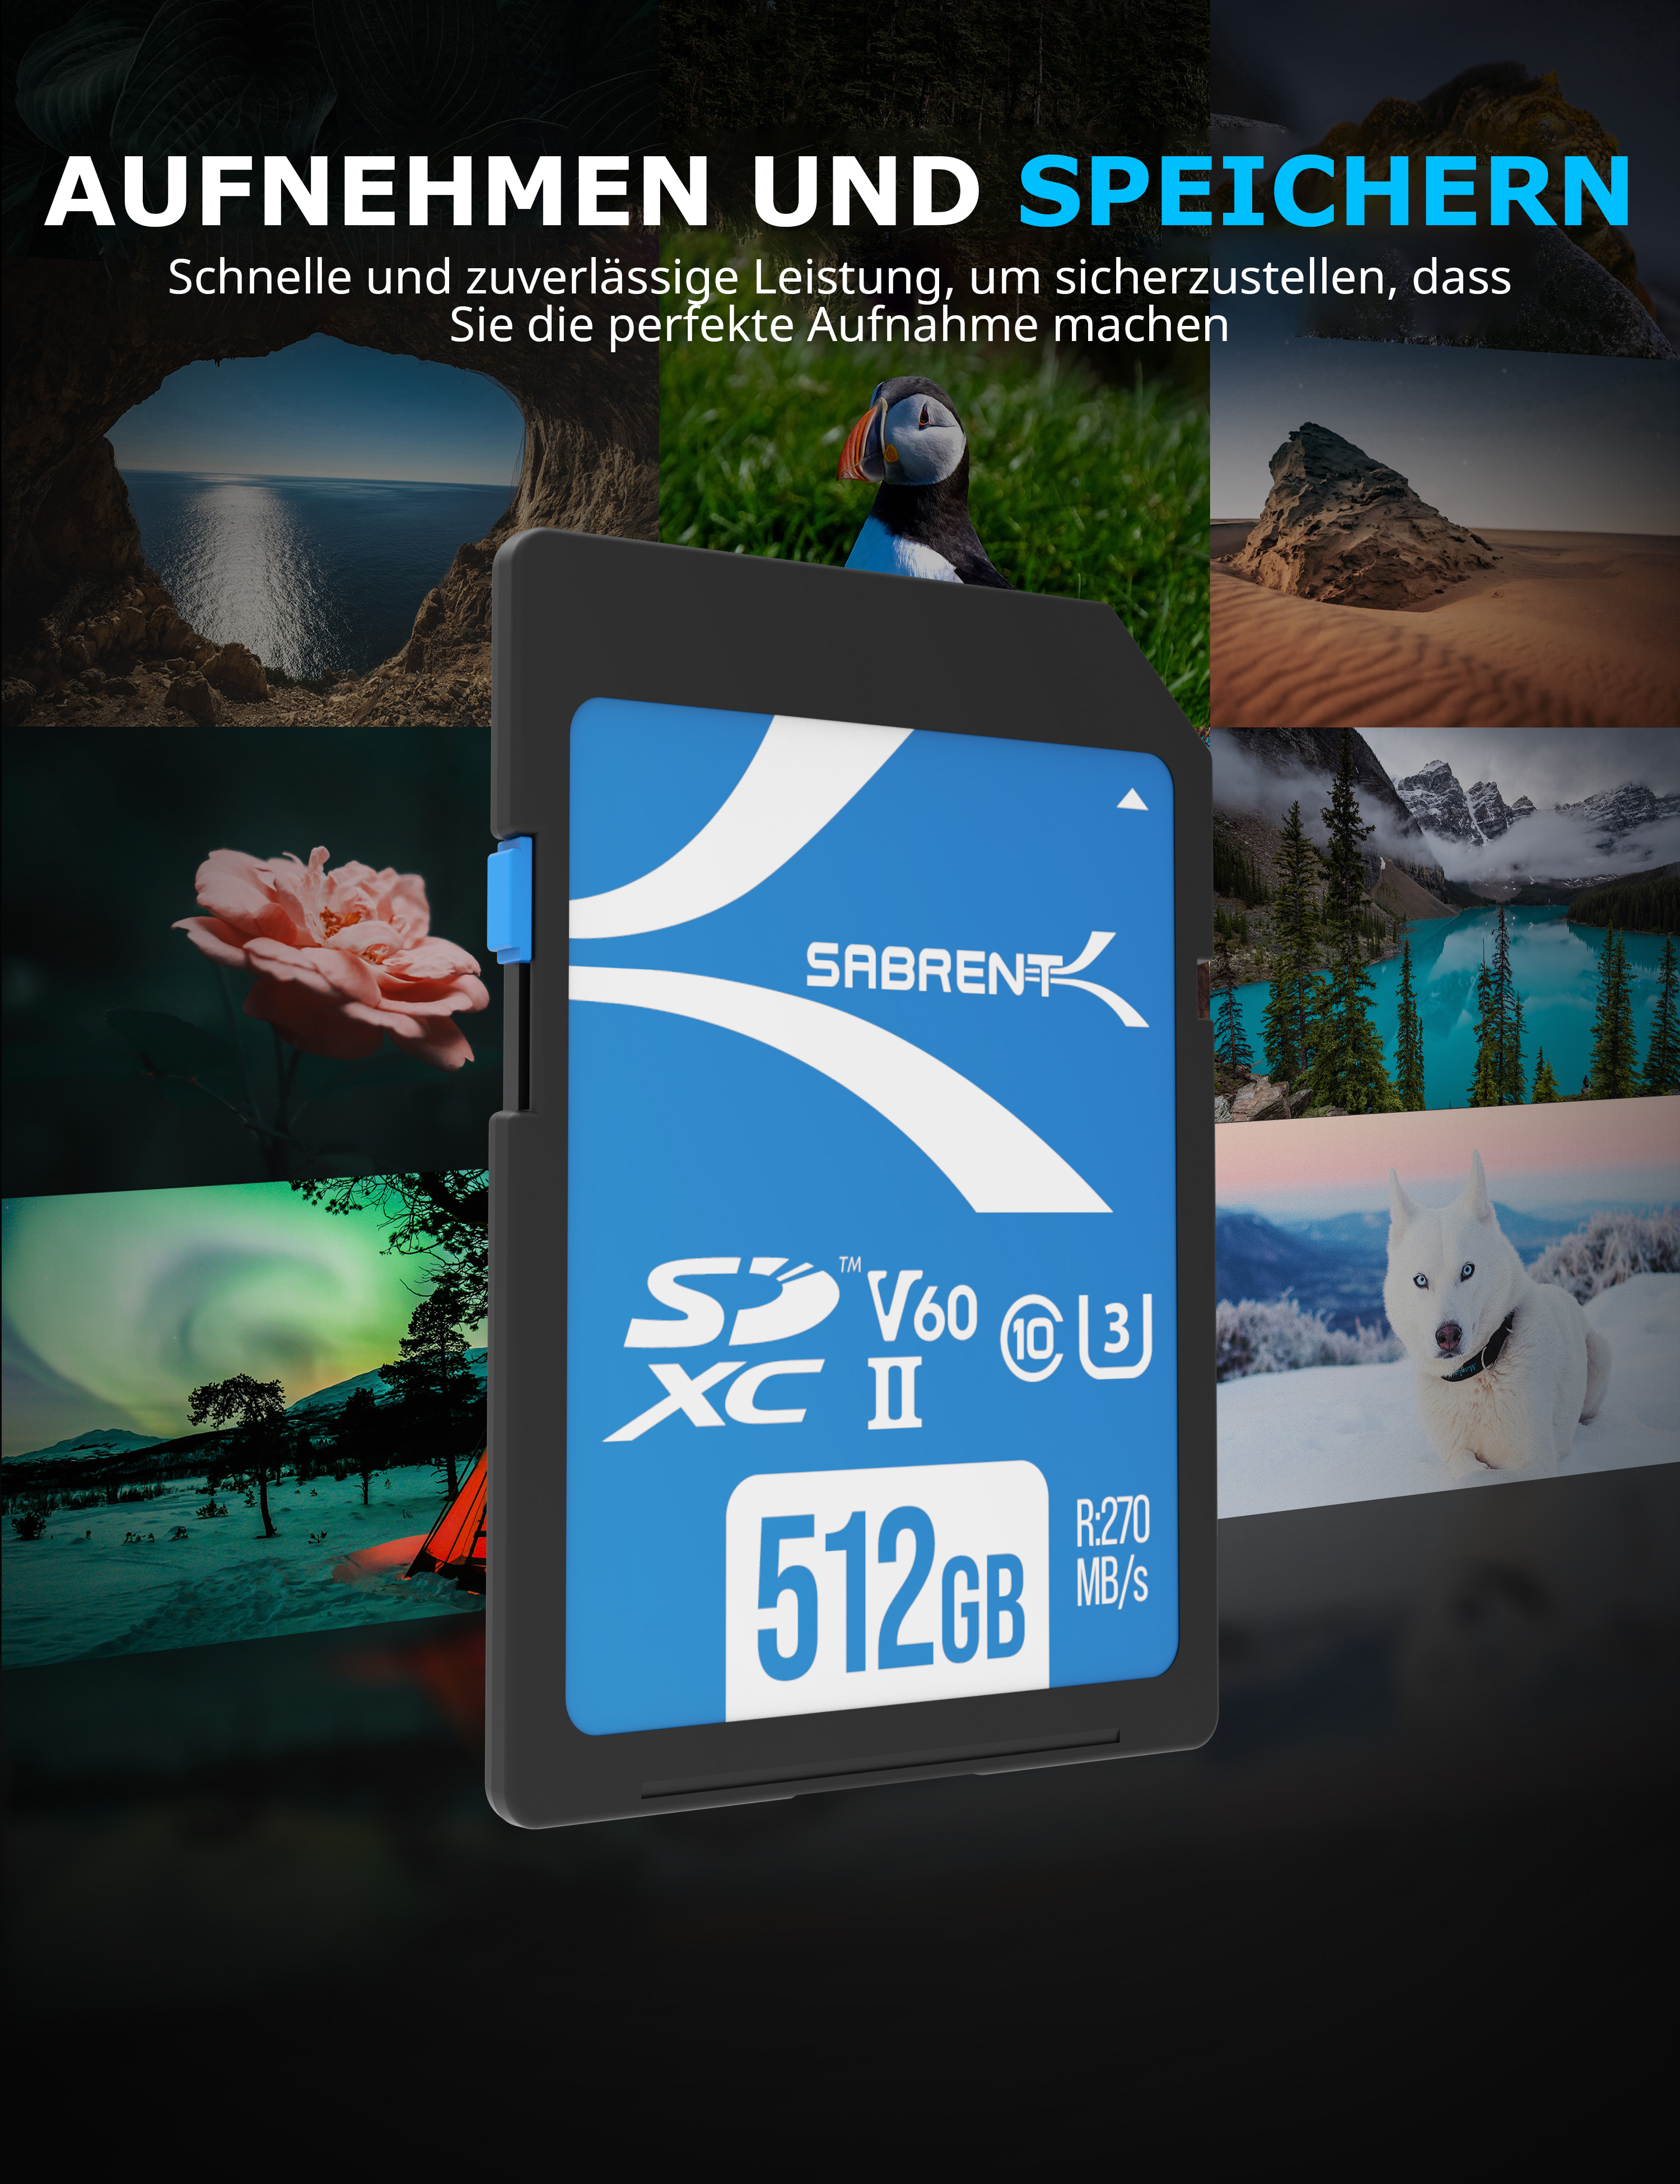 SABRENT V60 512GB SD SDXC GB, 512 UHS-II, Karte, MB/s SD 270